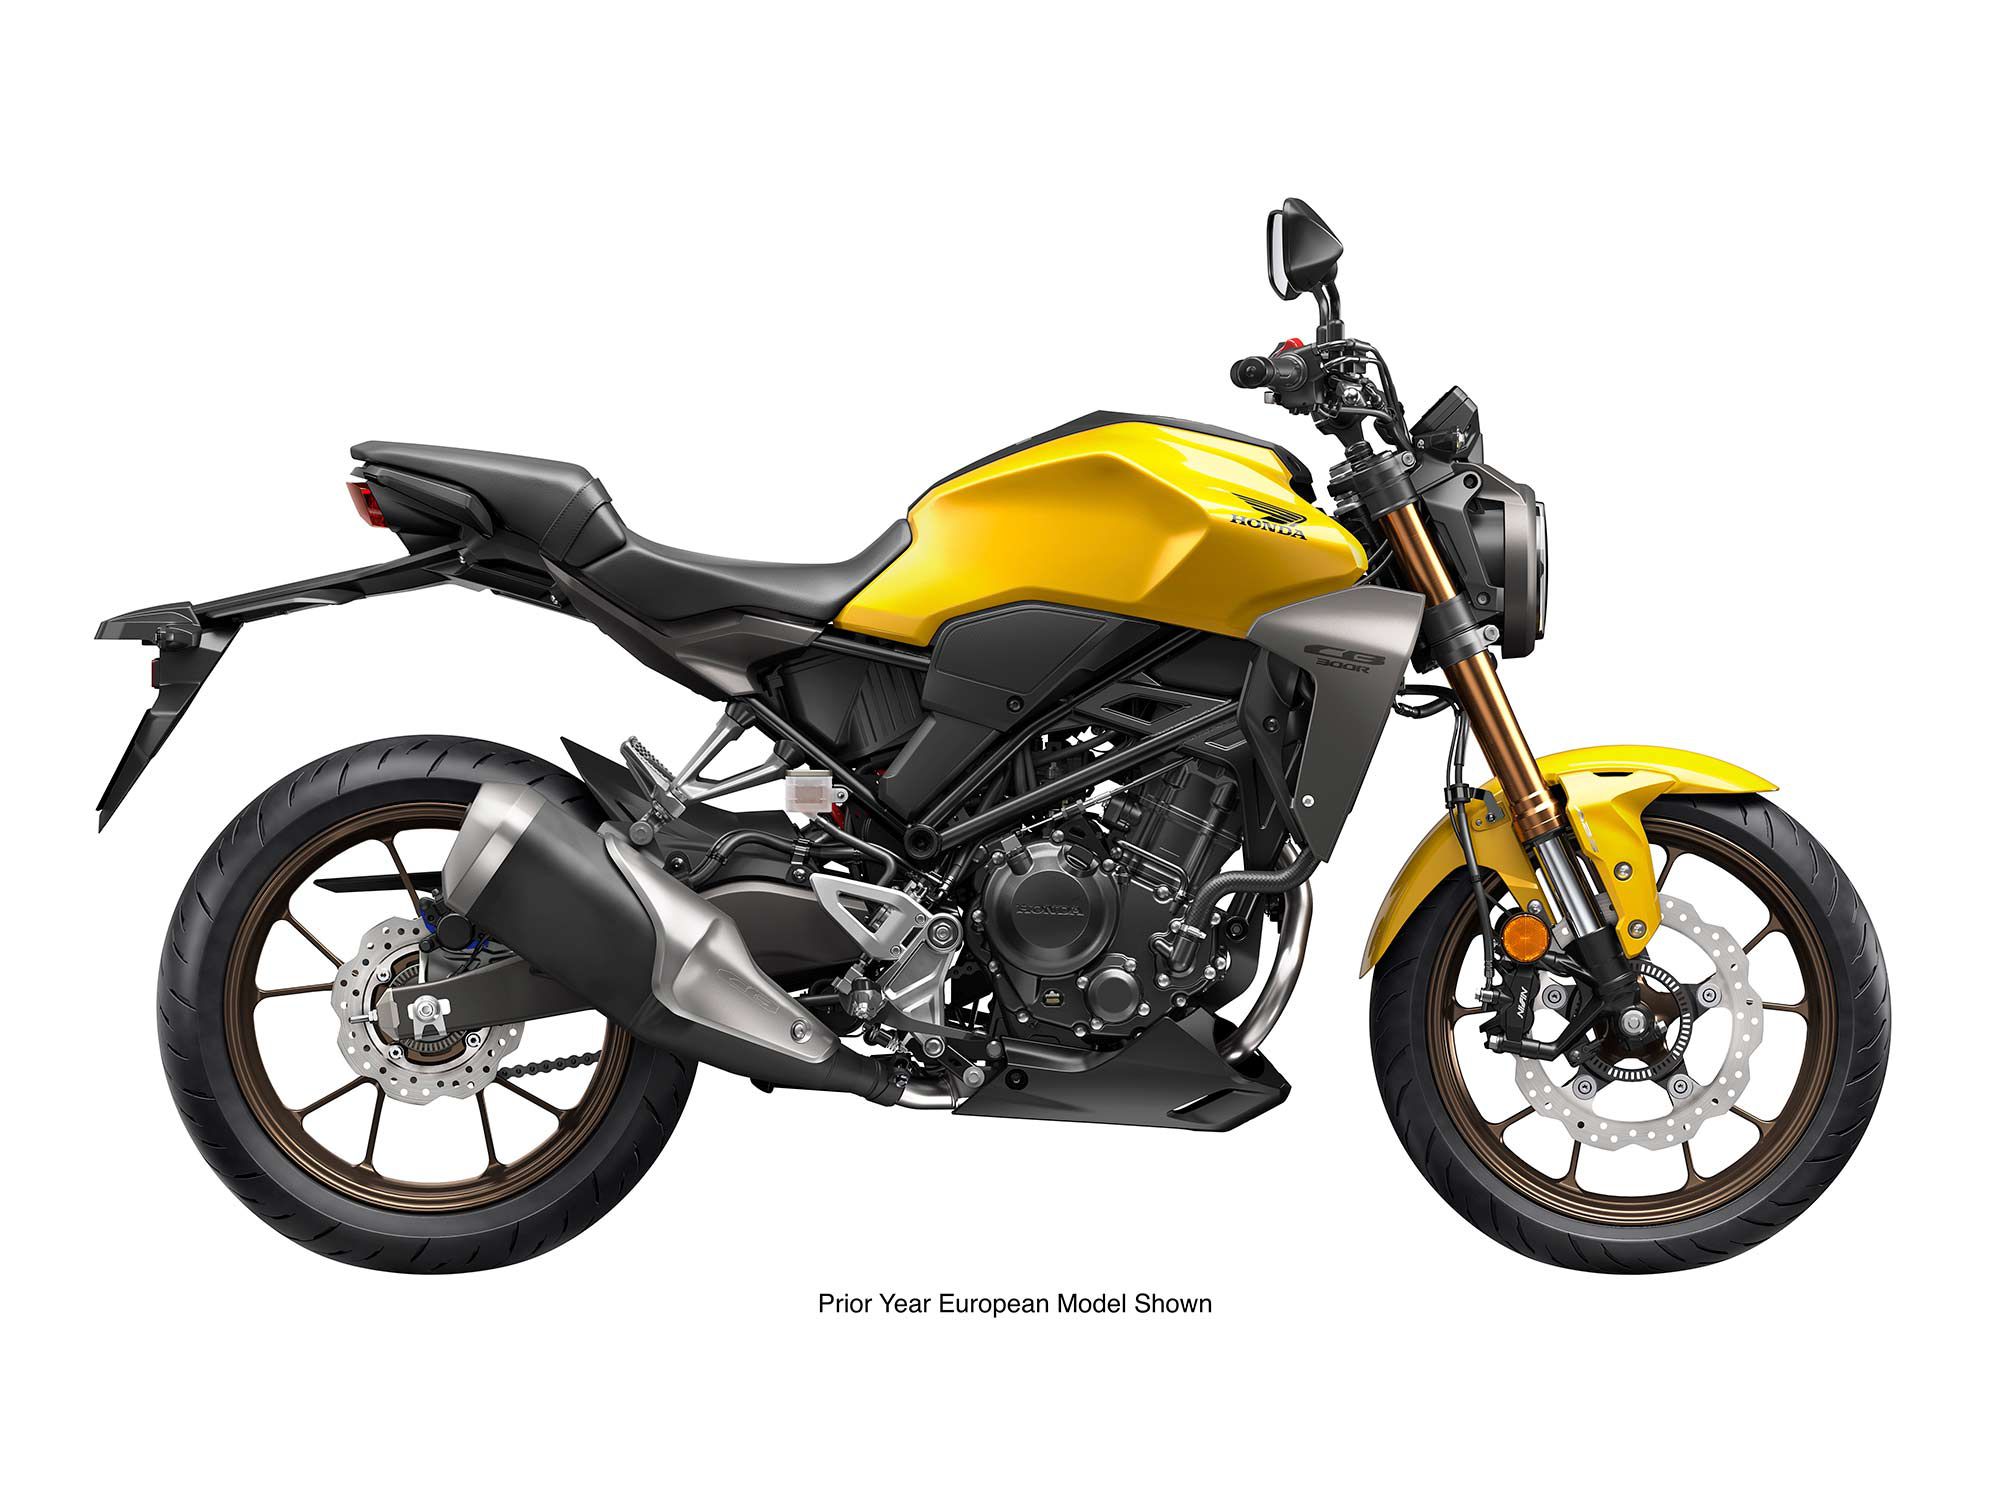 2023 Honda CB300R in Pearl Dusk Yellow.